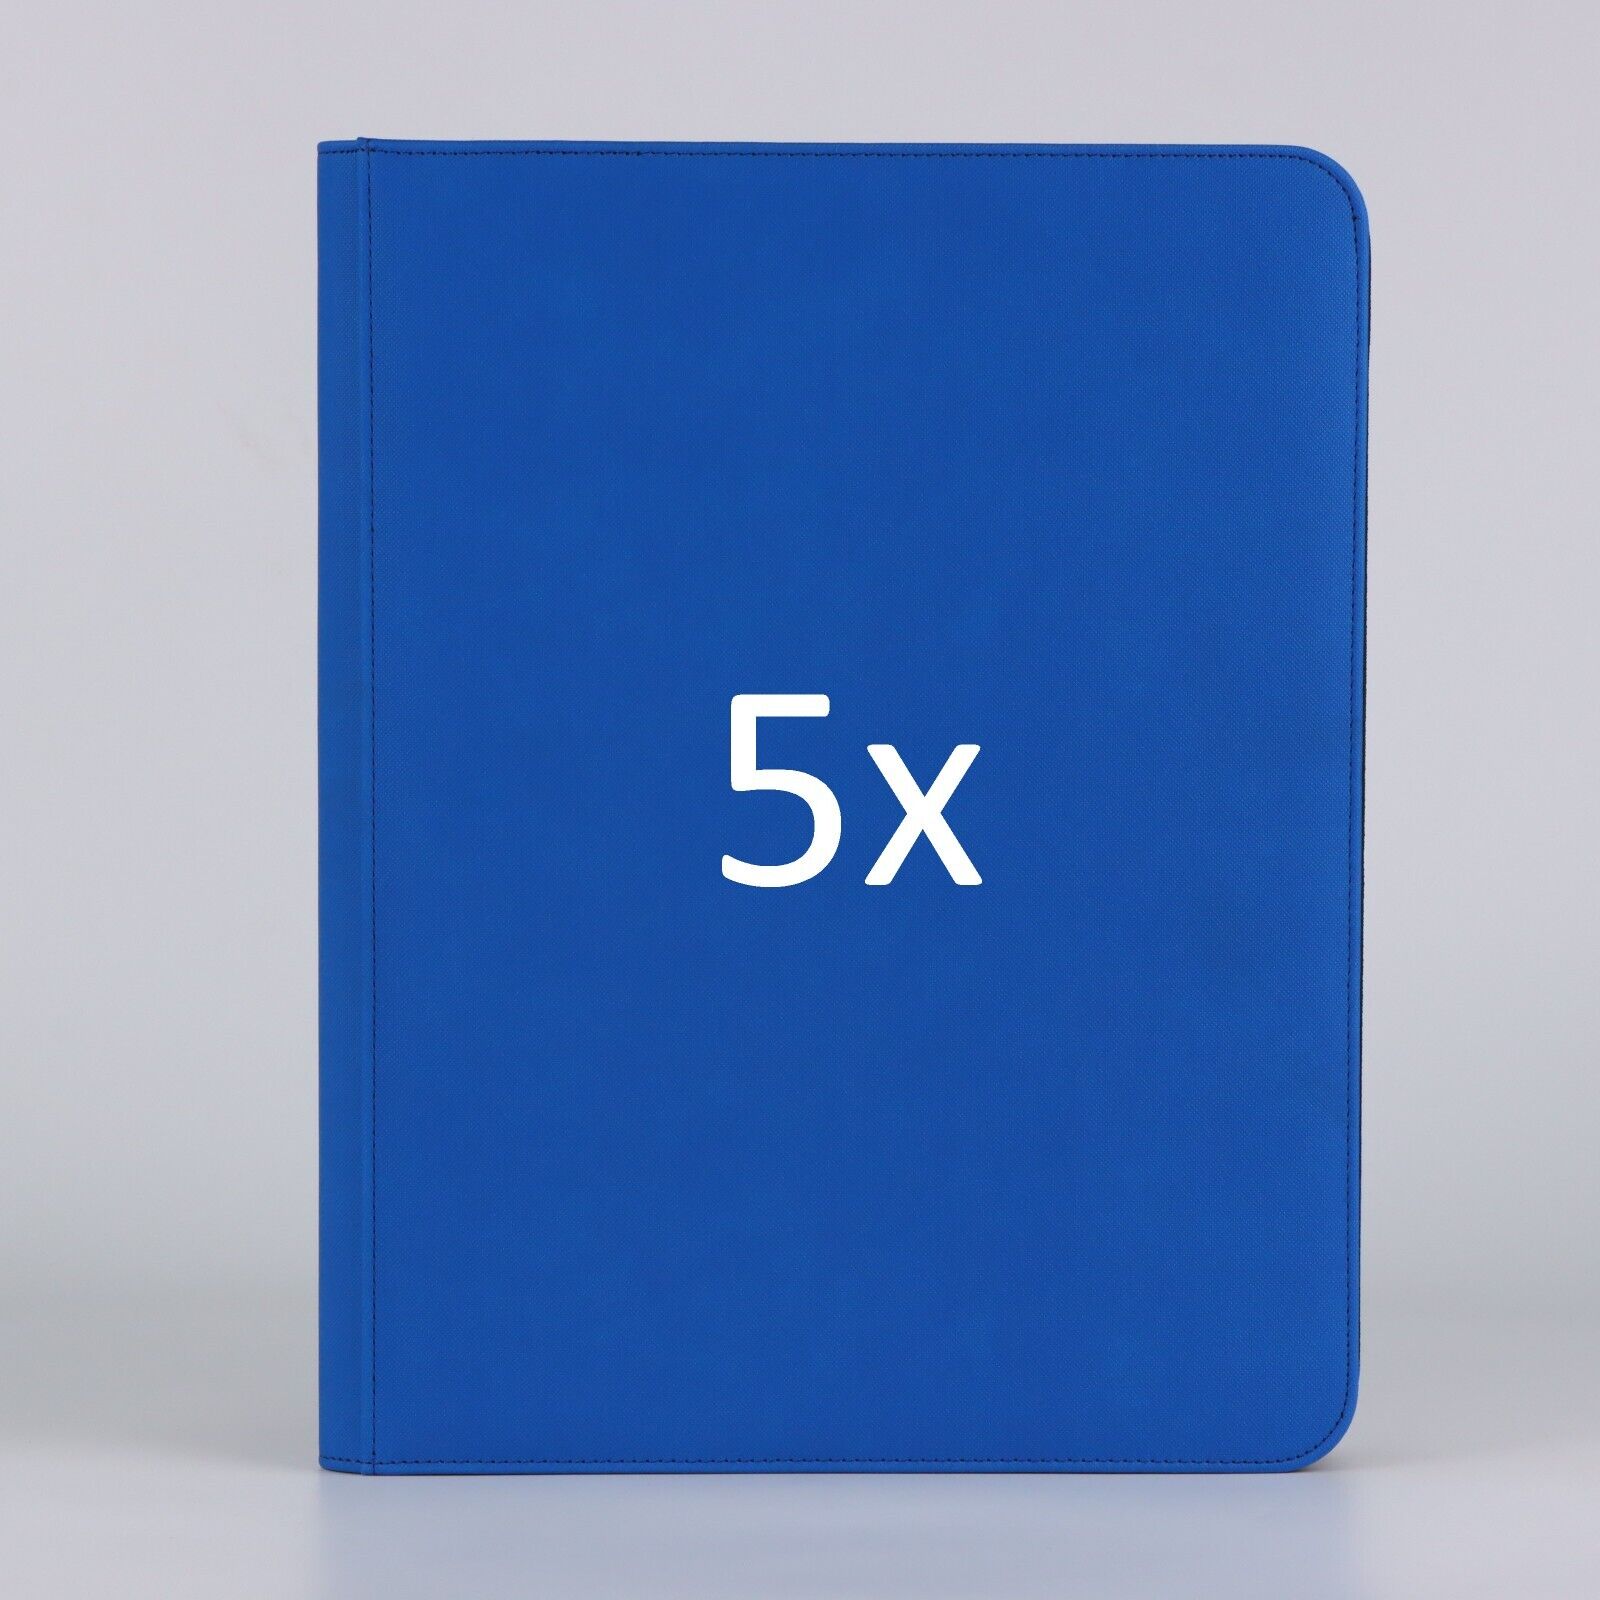 5x, 3x3 Pocket Top Loader Card Folder - Blue Leather CLEAR Pockets Aus Stock